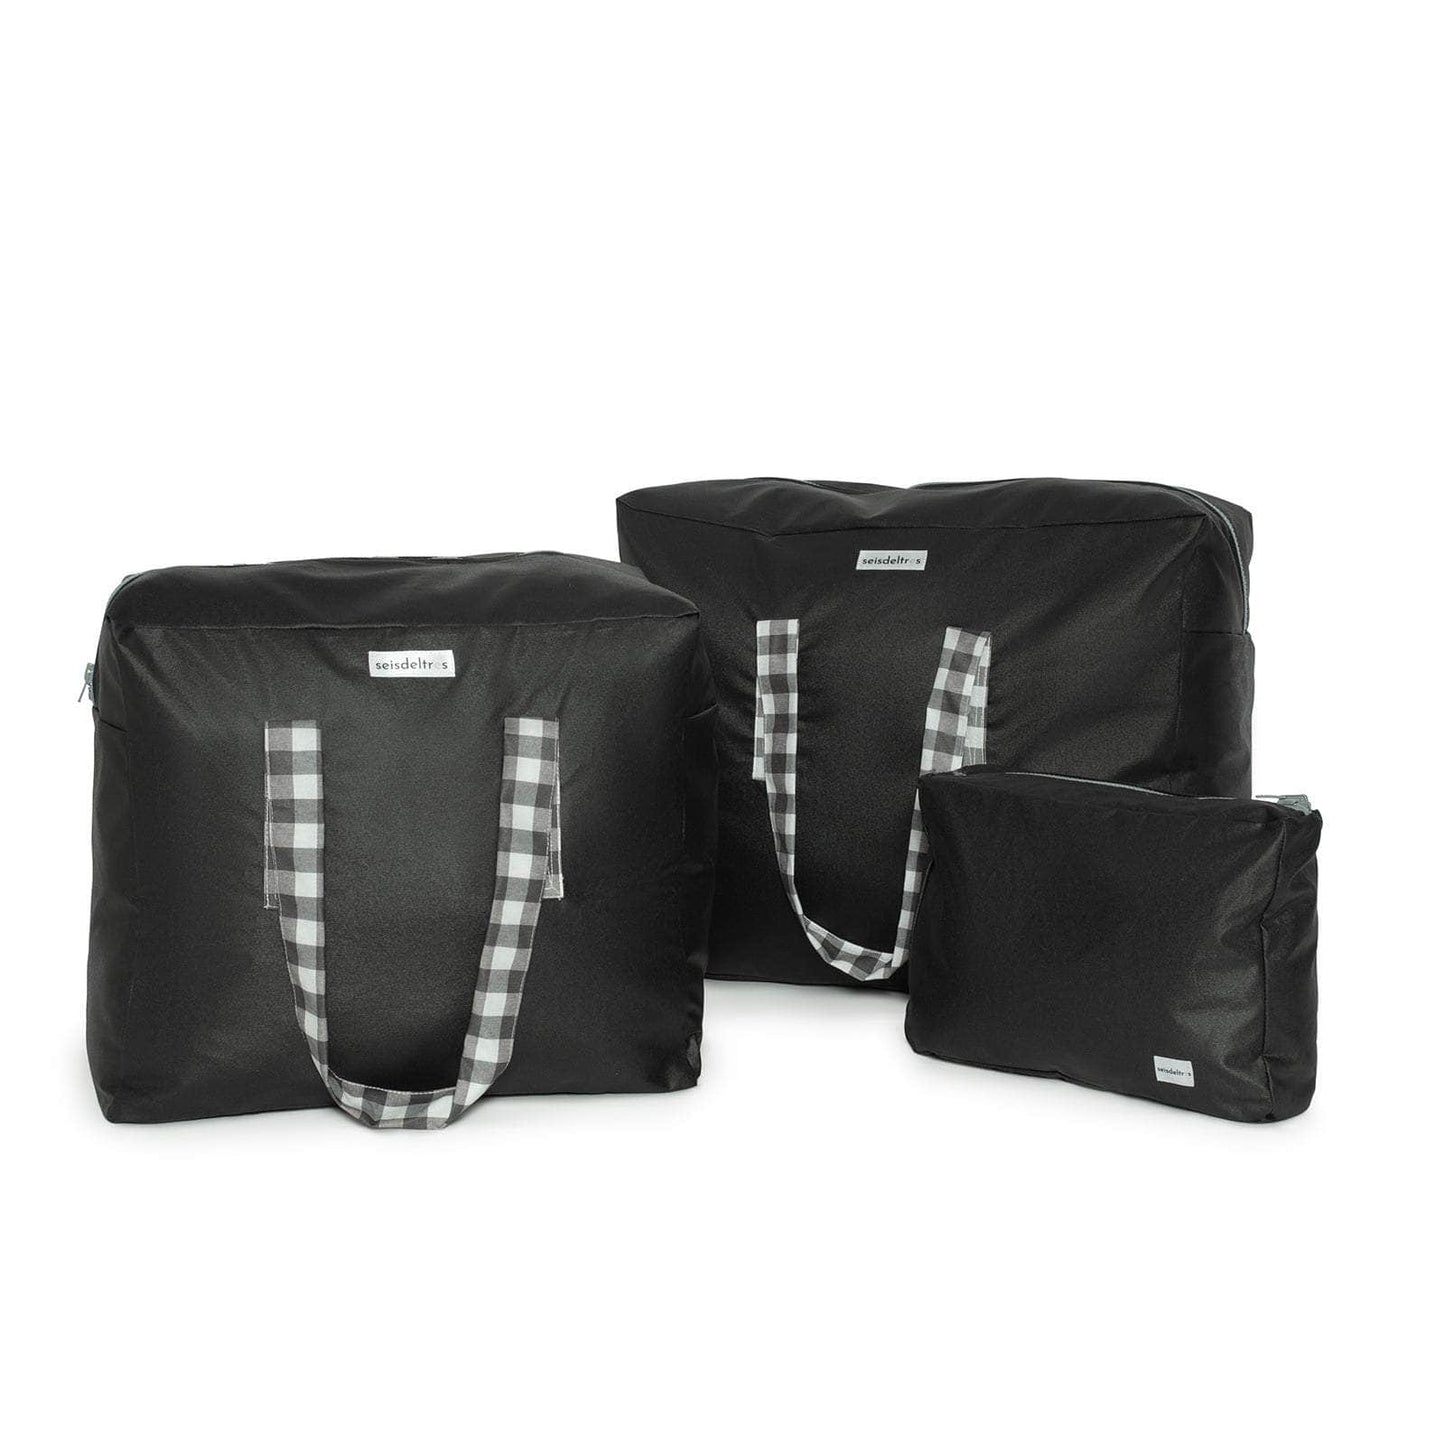 pack mybigbag Pack completo - bolsa L, bolsa XL y neceser - Vichy/Negro